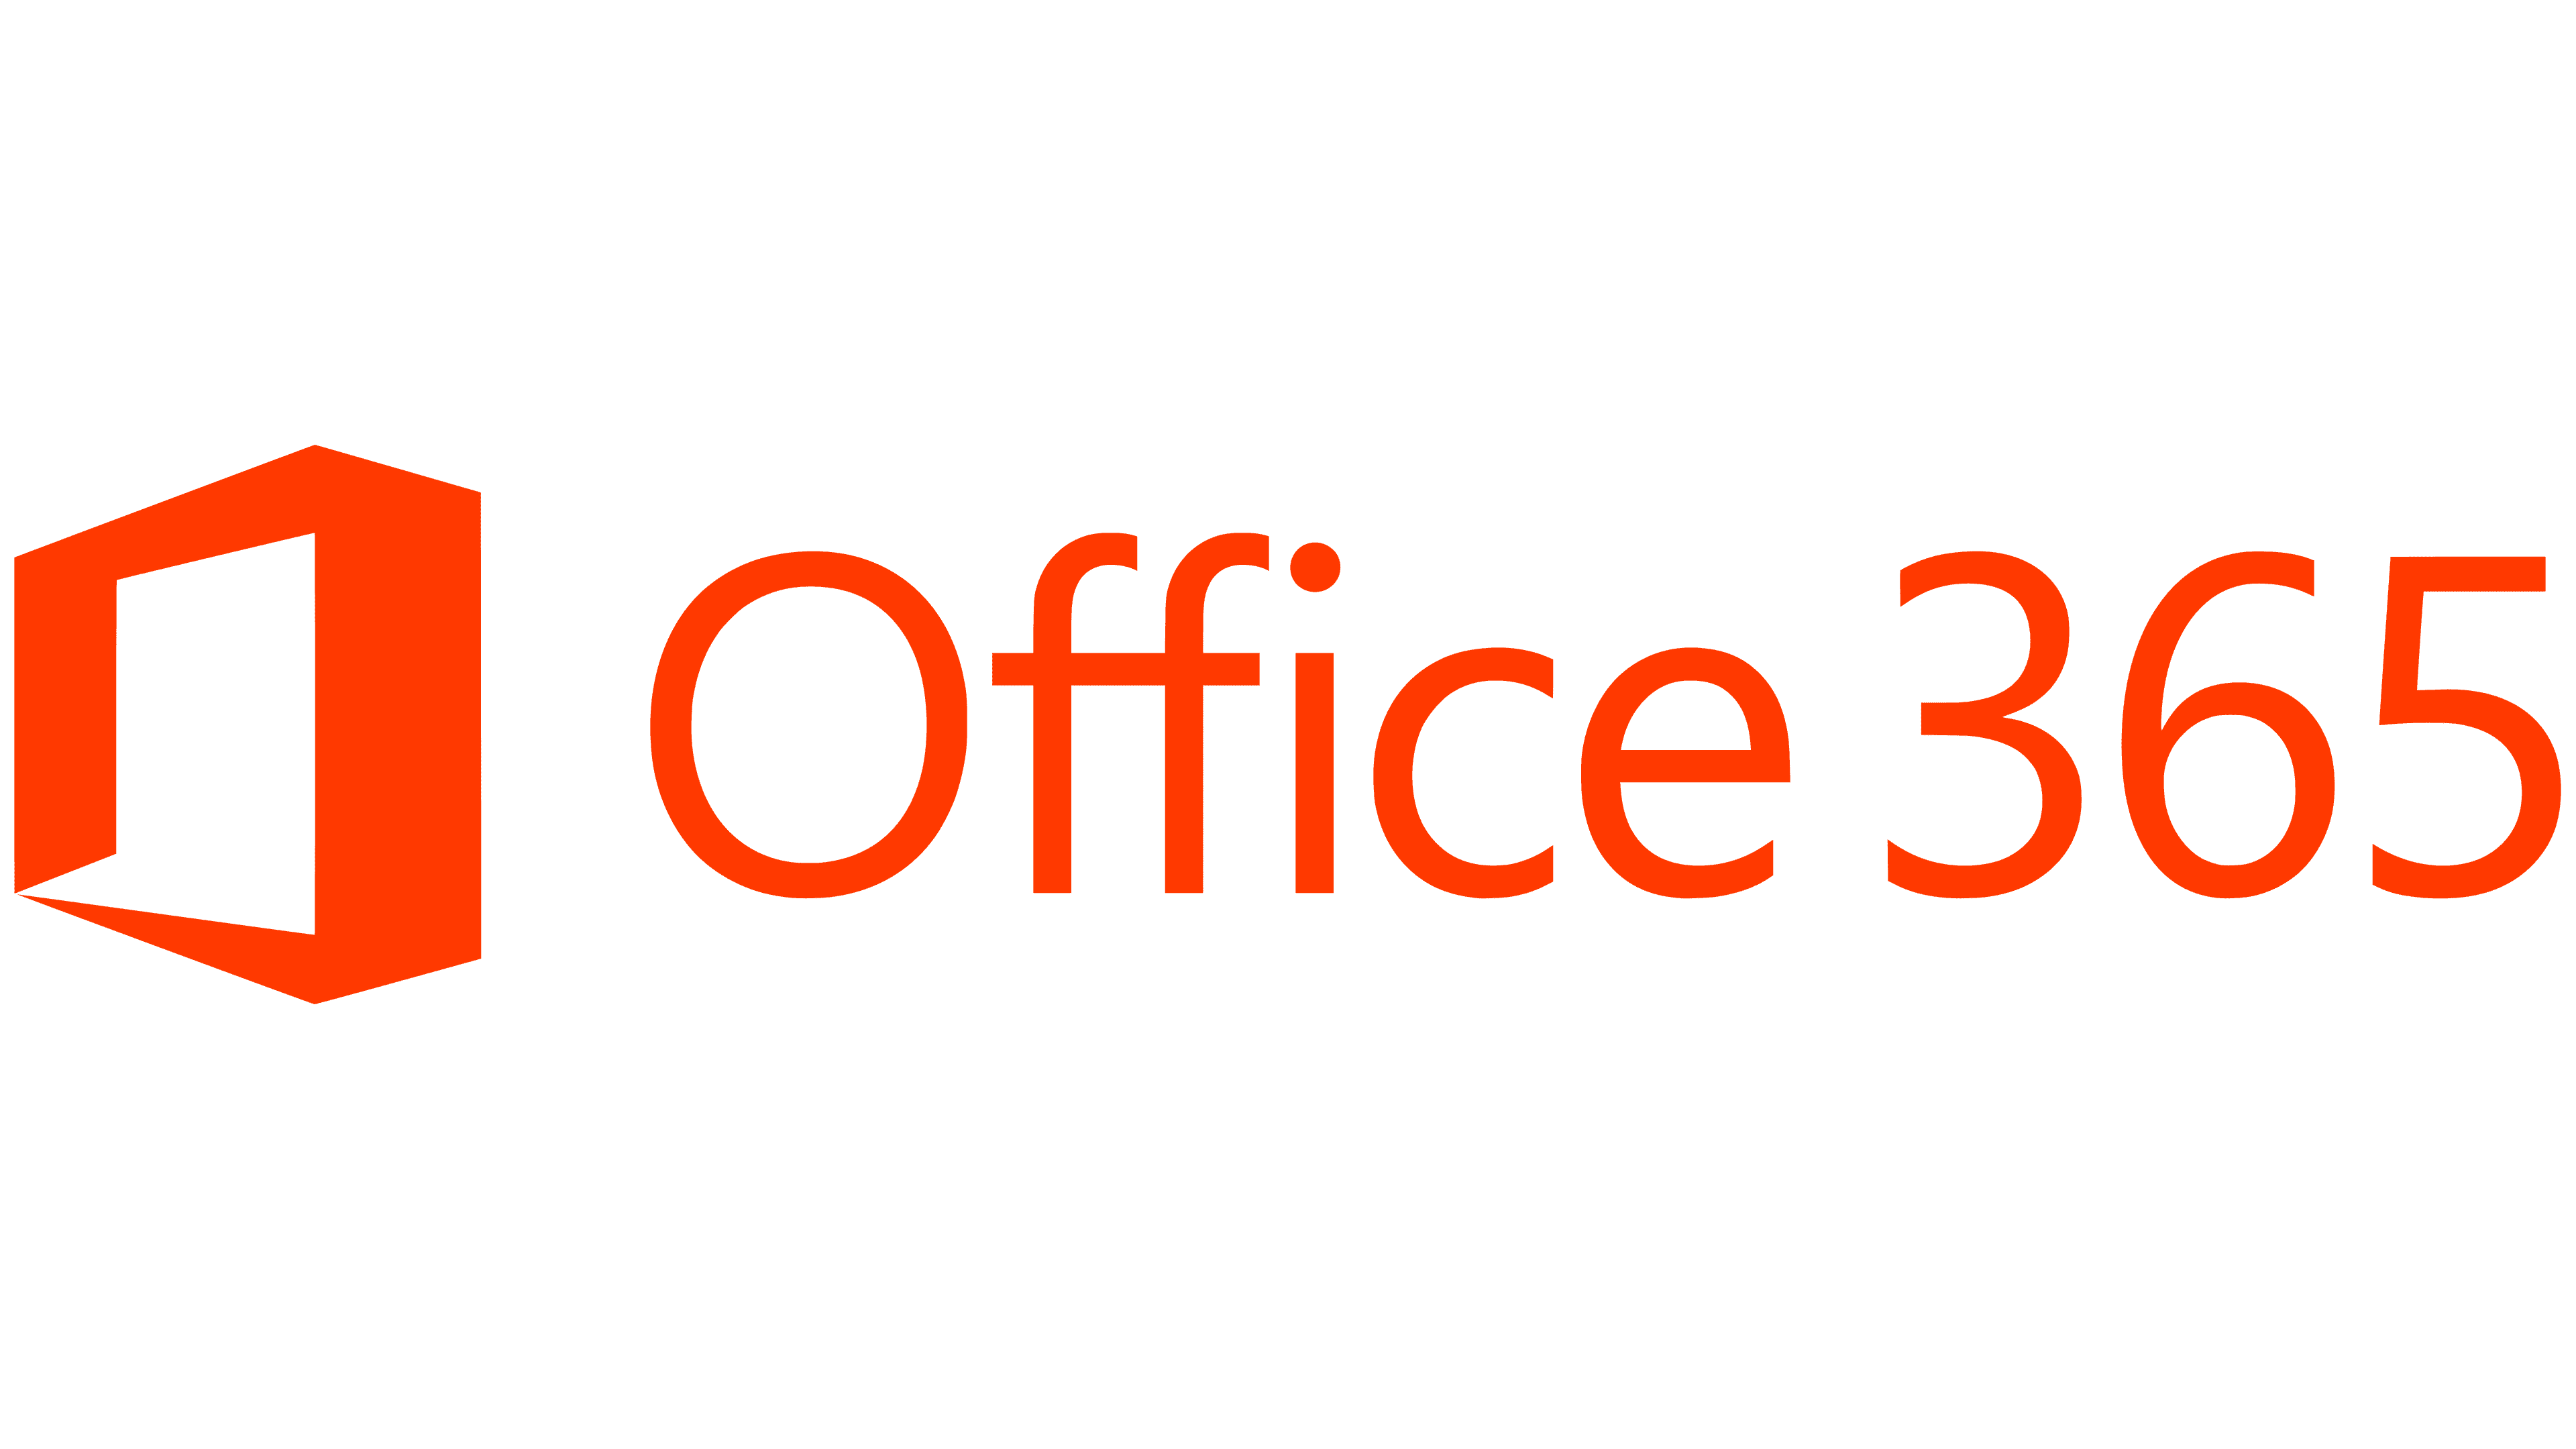 Office-365-Logo-2013-2020